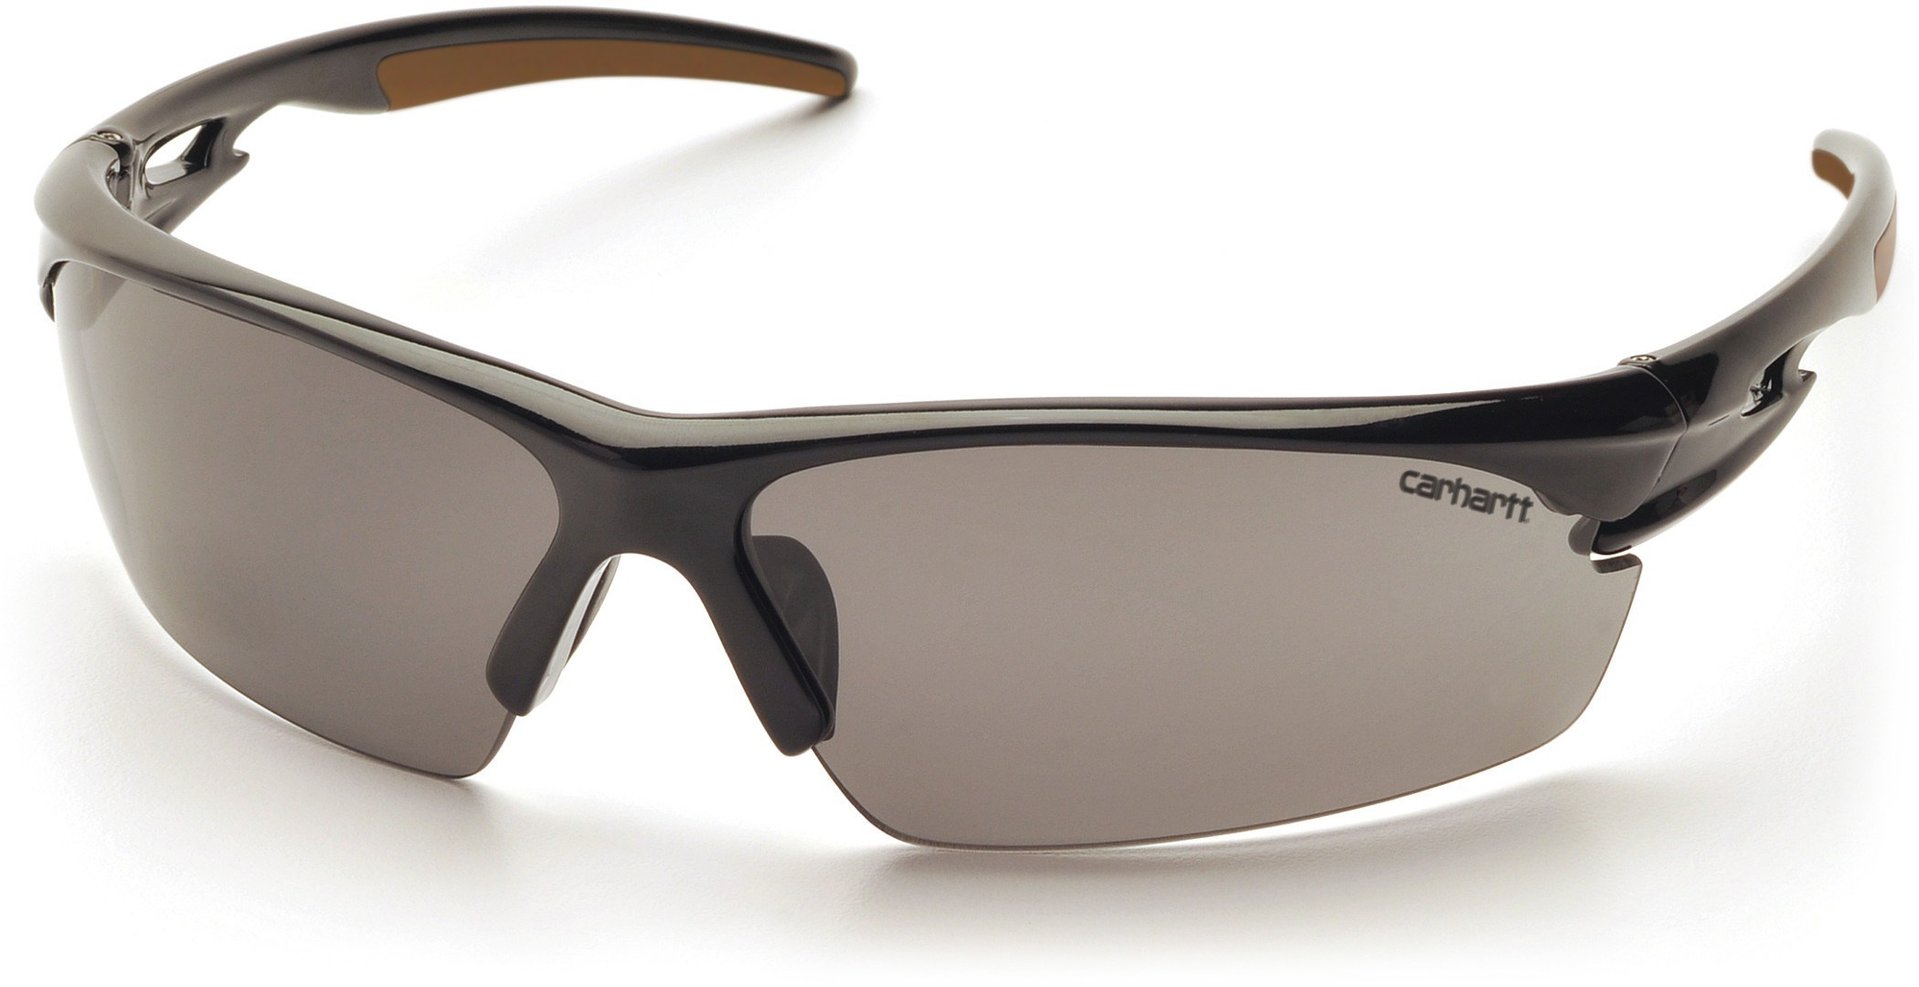 Carhartt Ironside Plus Safety Glasses, grey, grey